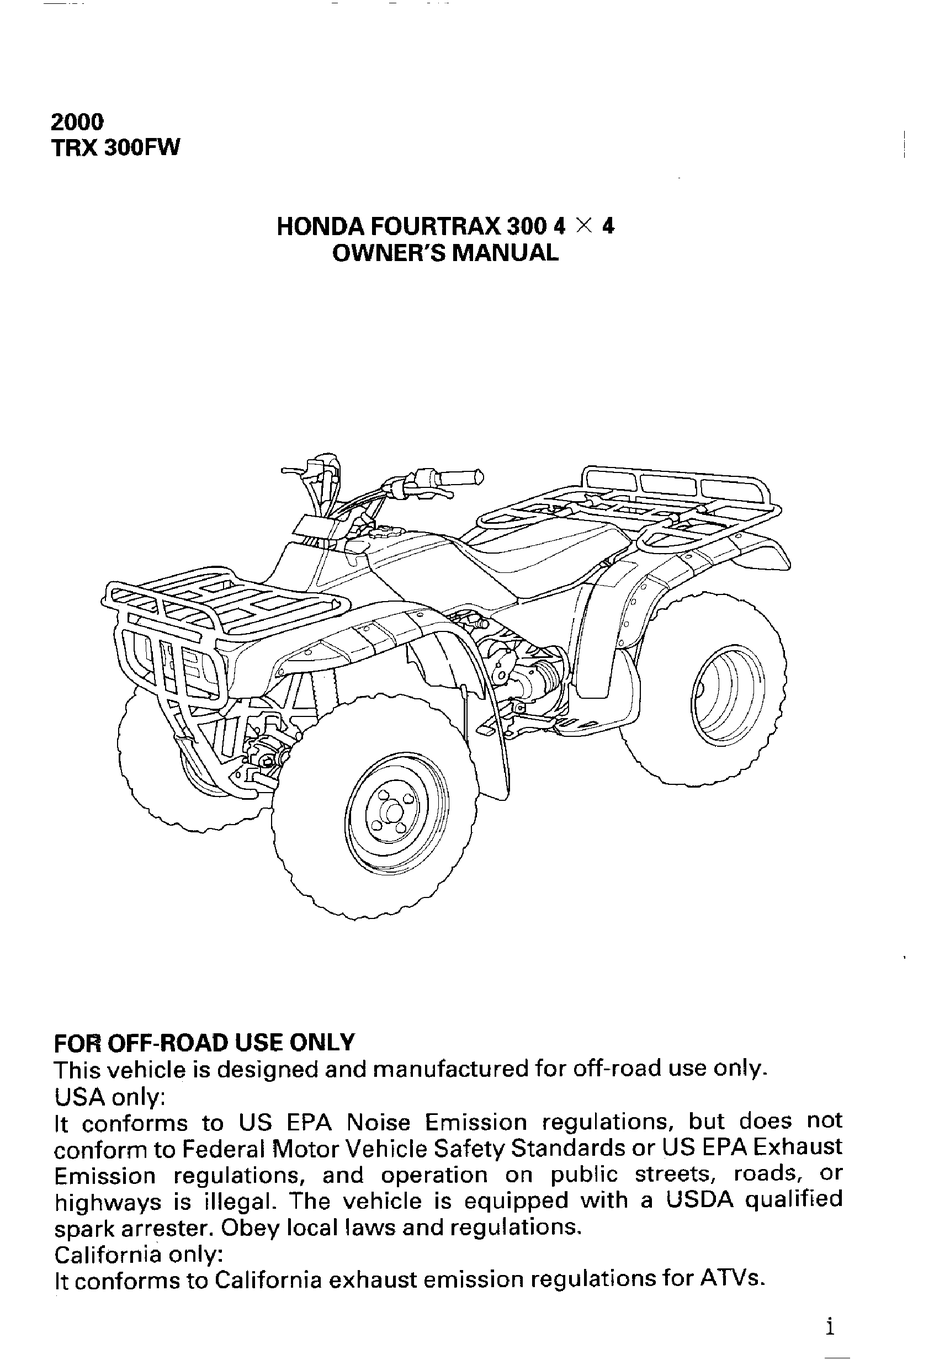 1988 honda fourtrax 300 service manual pdf download wake the f up alarm download